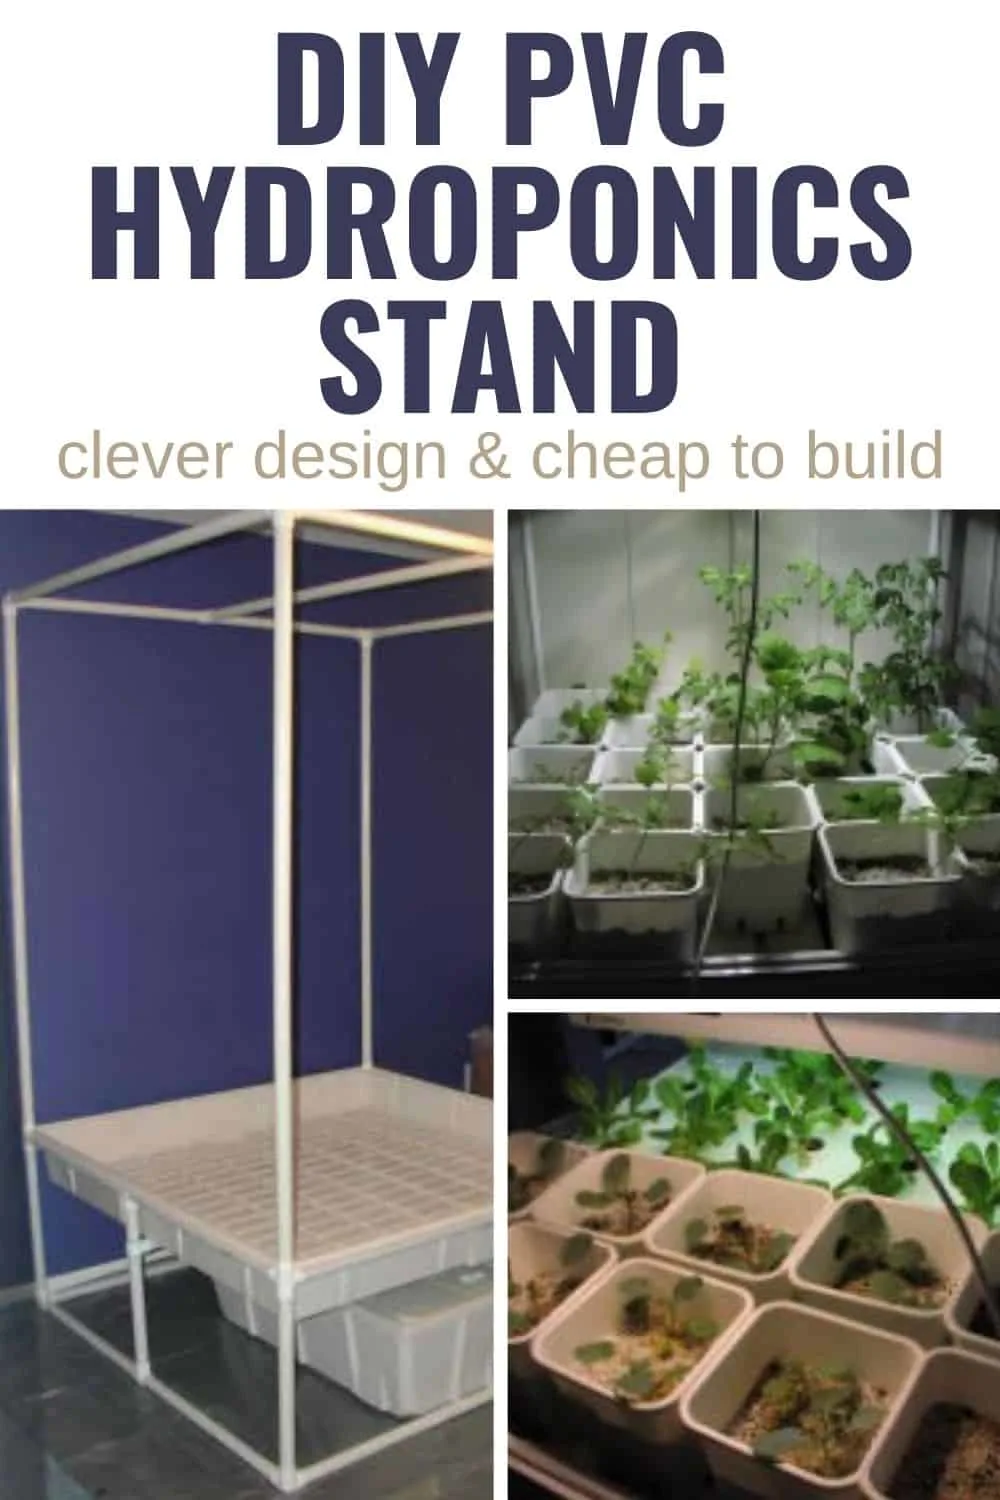 DIY PVC hydroponics stand